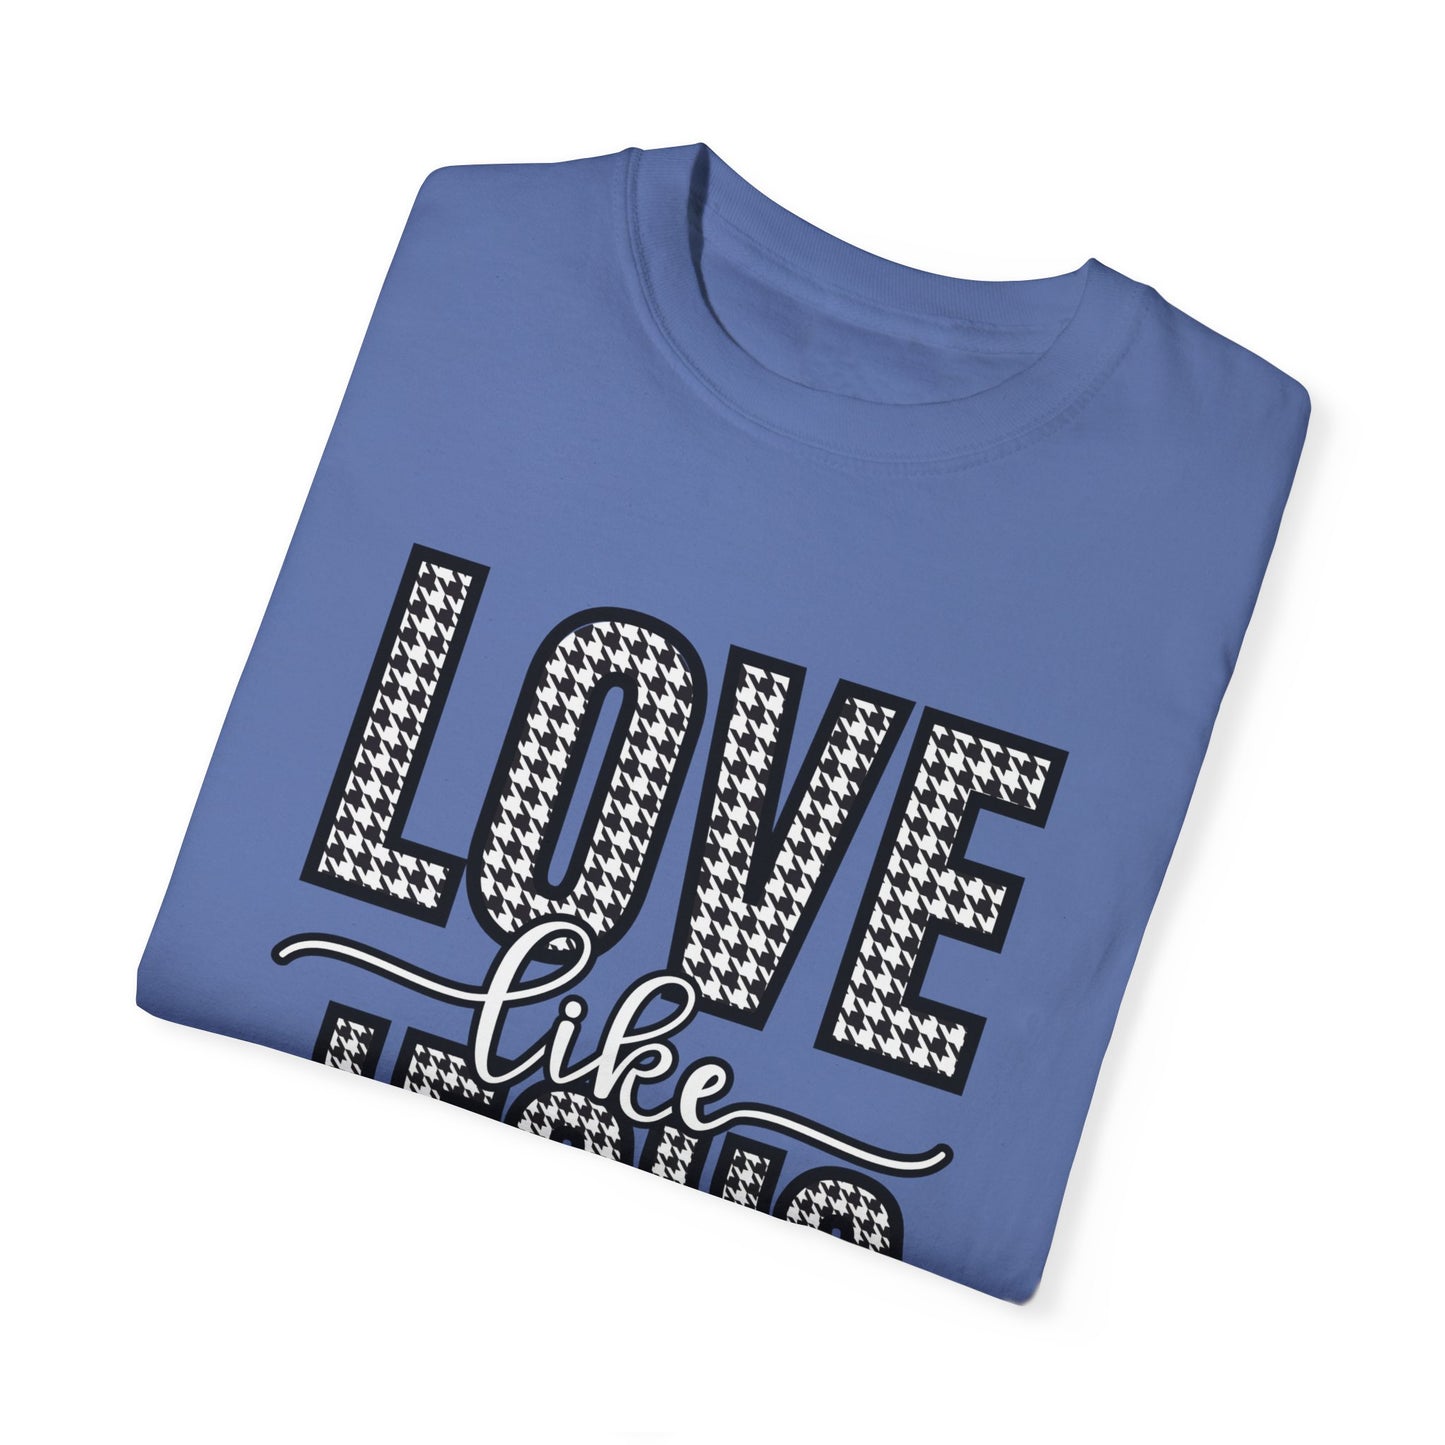 Love Like Jesus Houndstooth Tee - Women's Comfort Colors Short Sleeve T-shirt - Eddy and Rita